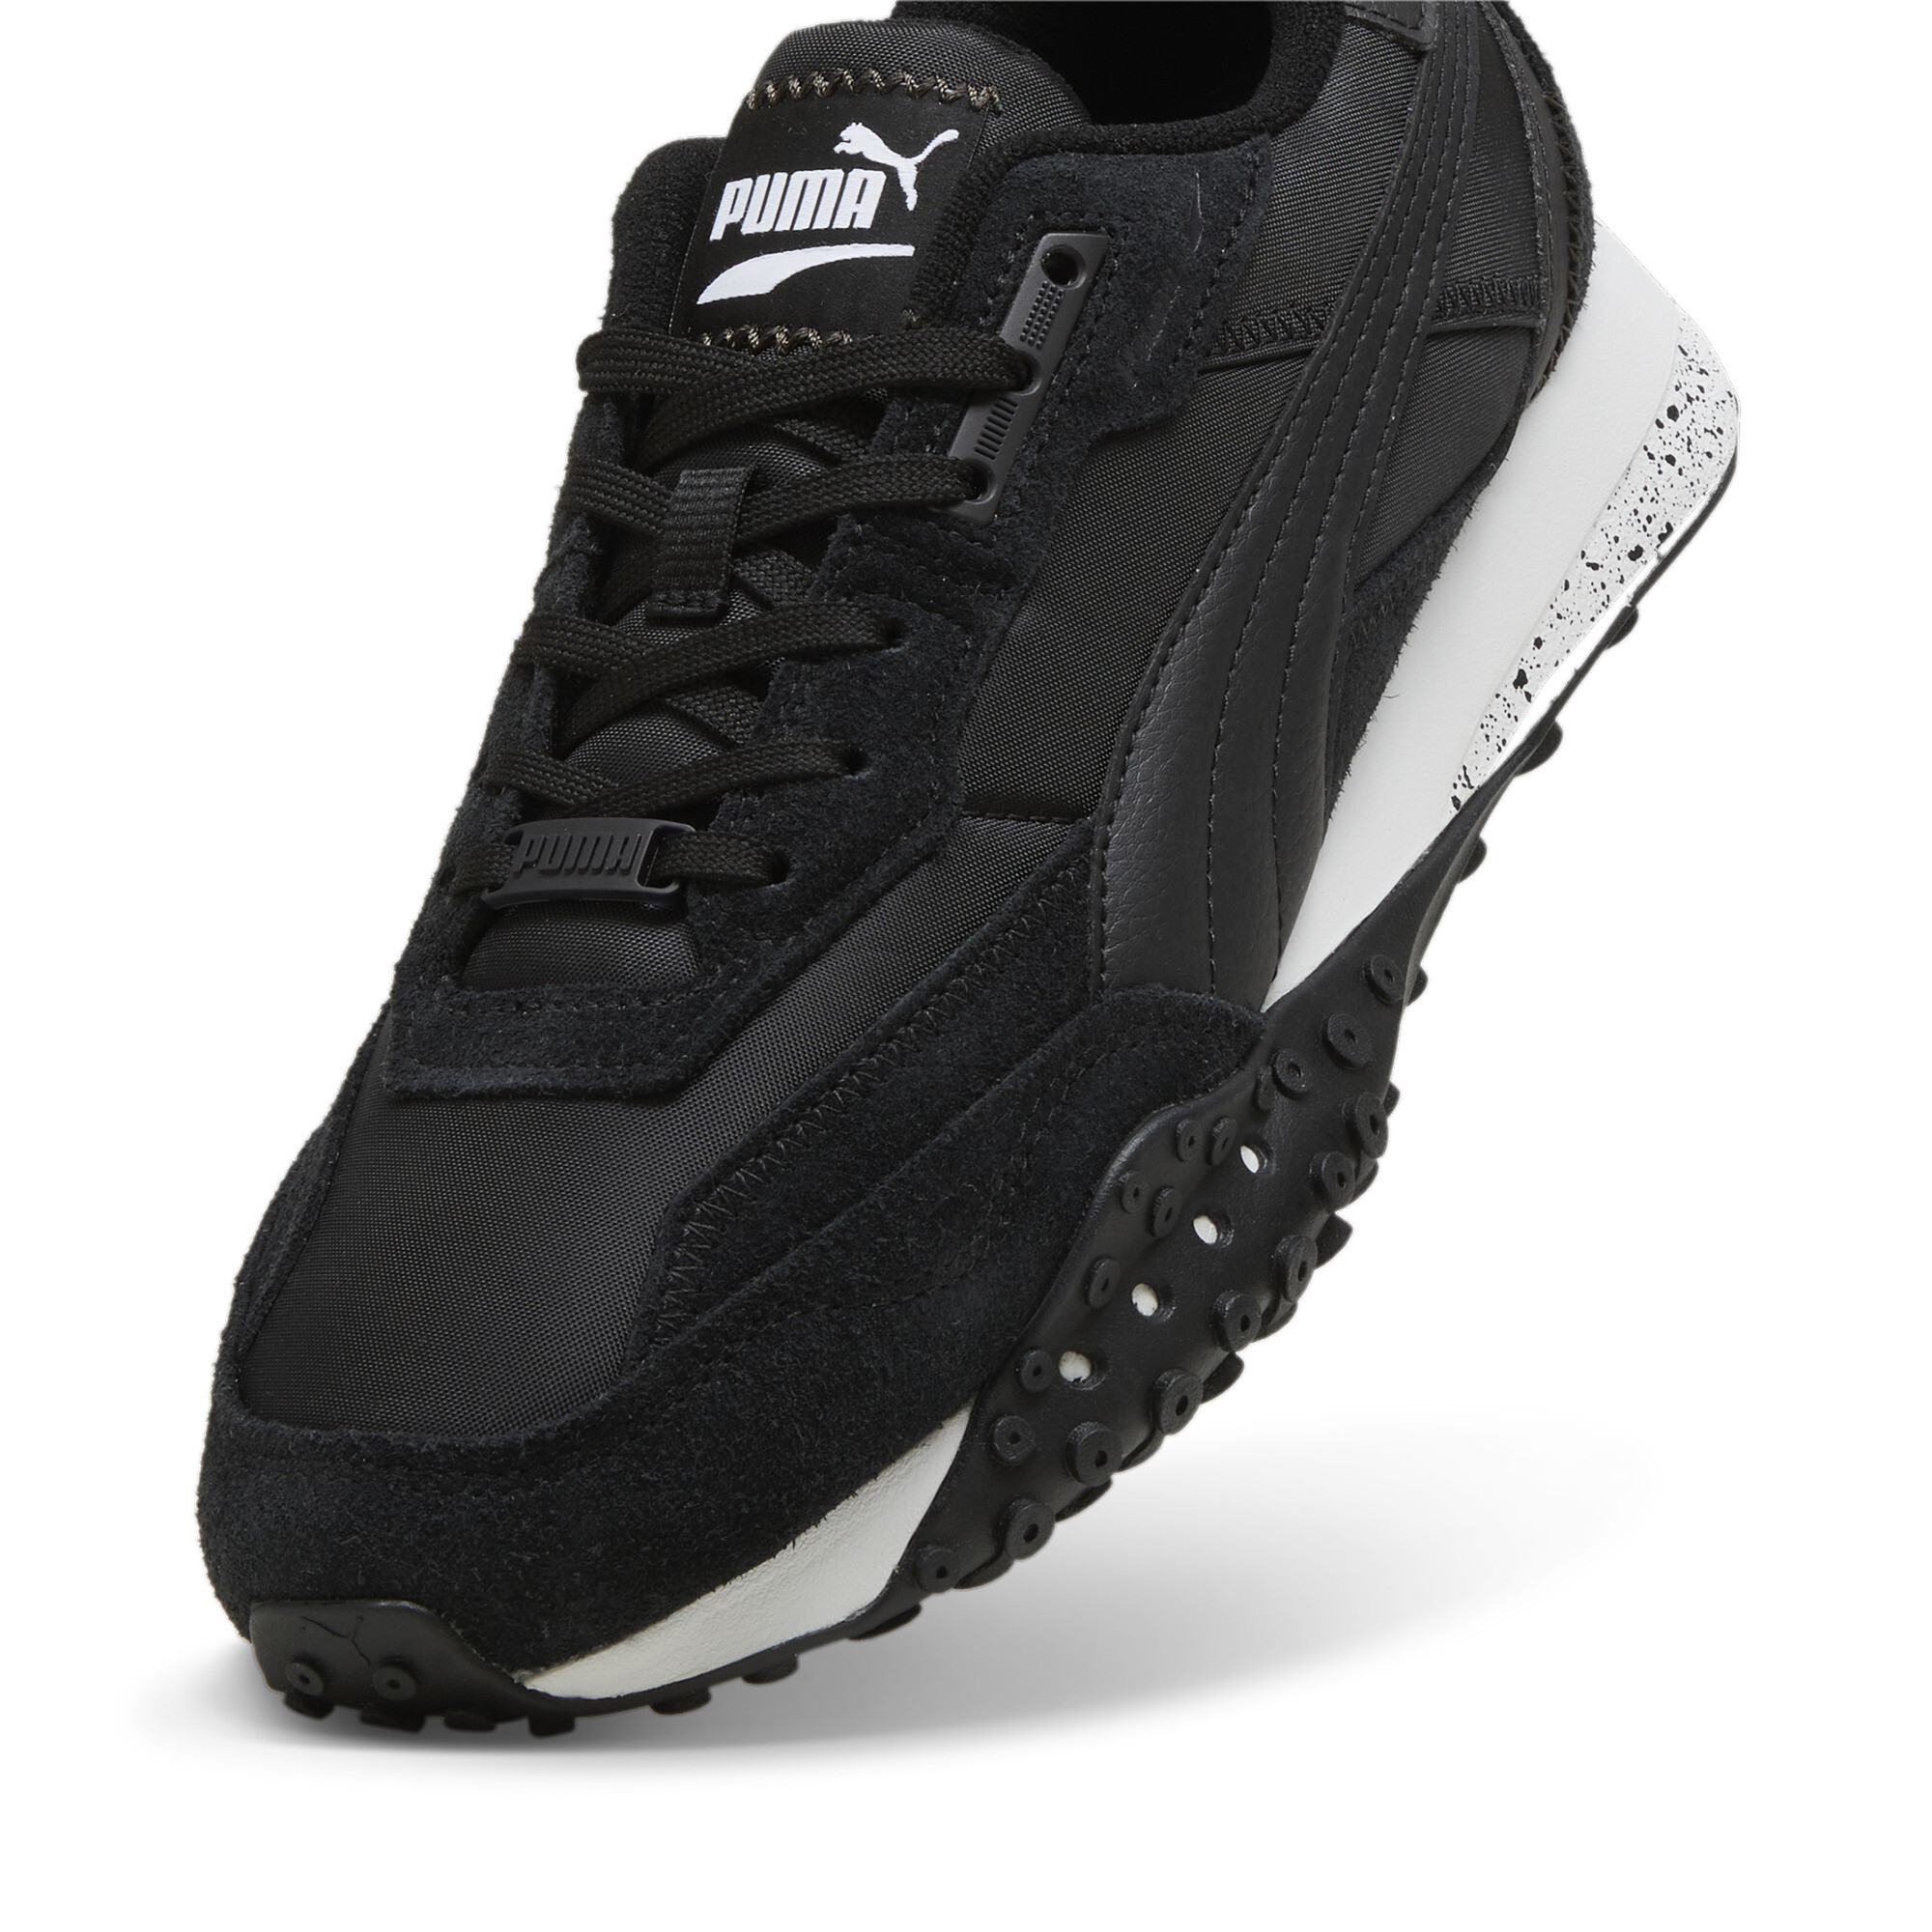 Men's PUMA Blktop Rider Sneakers In Black, Size EU 38.5